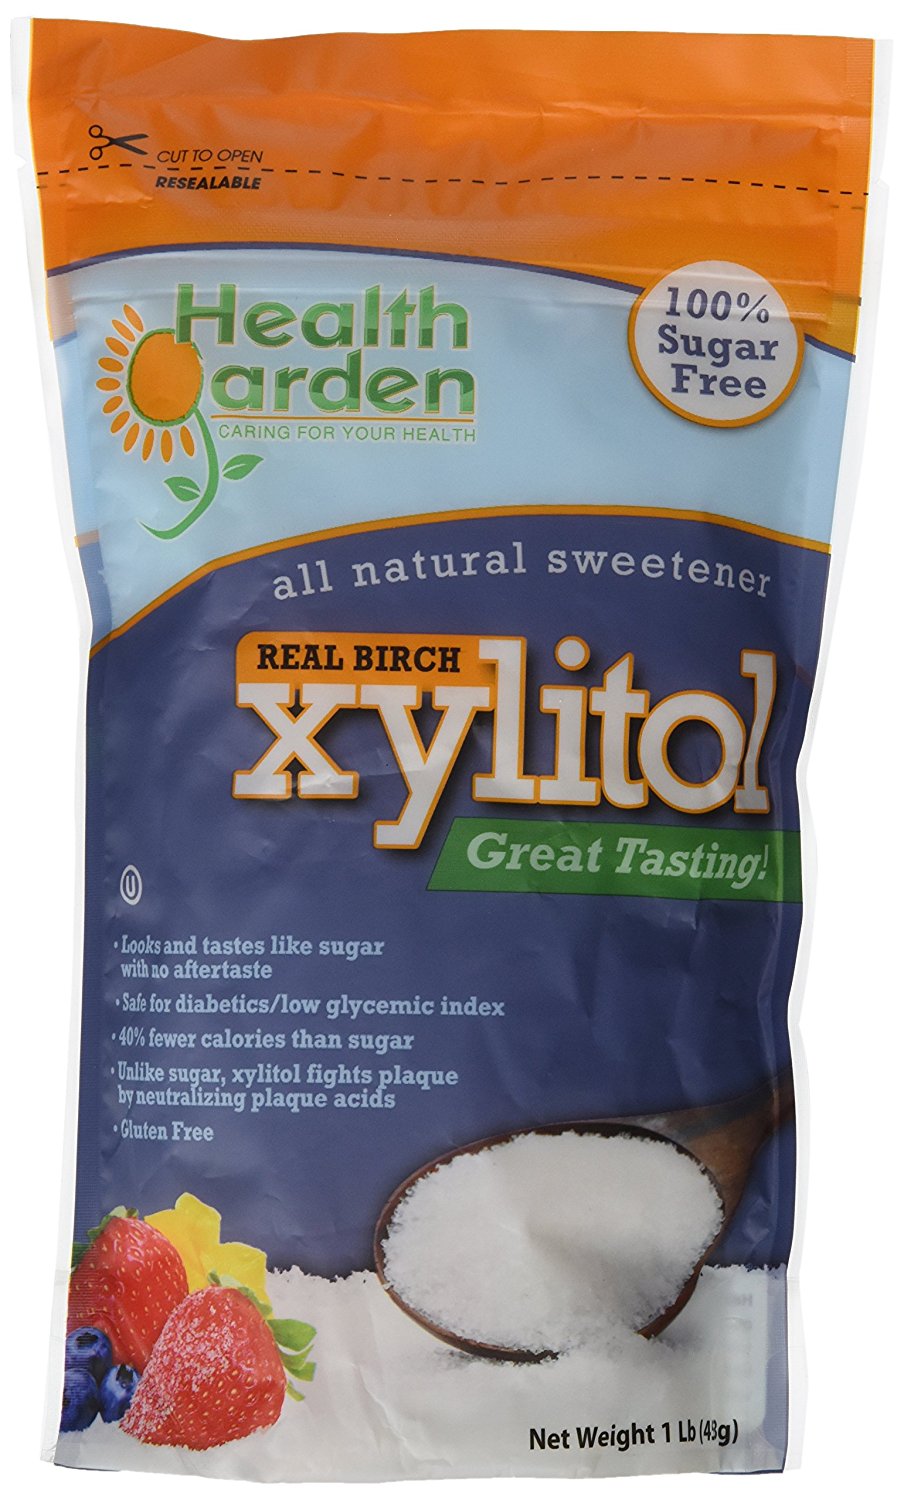 HEALTH GARDEN: Real Birch Xylitol Sweetener 1 LB